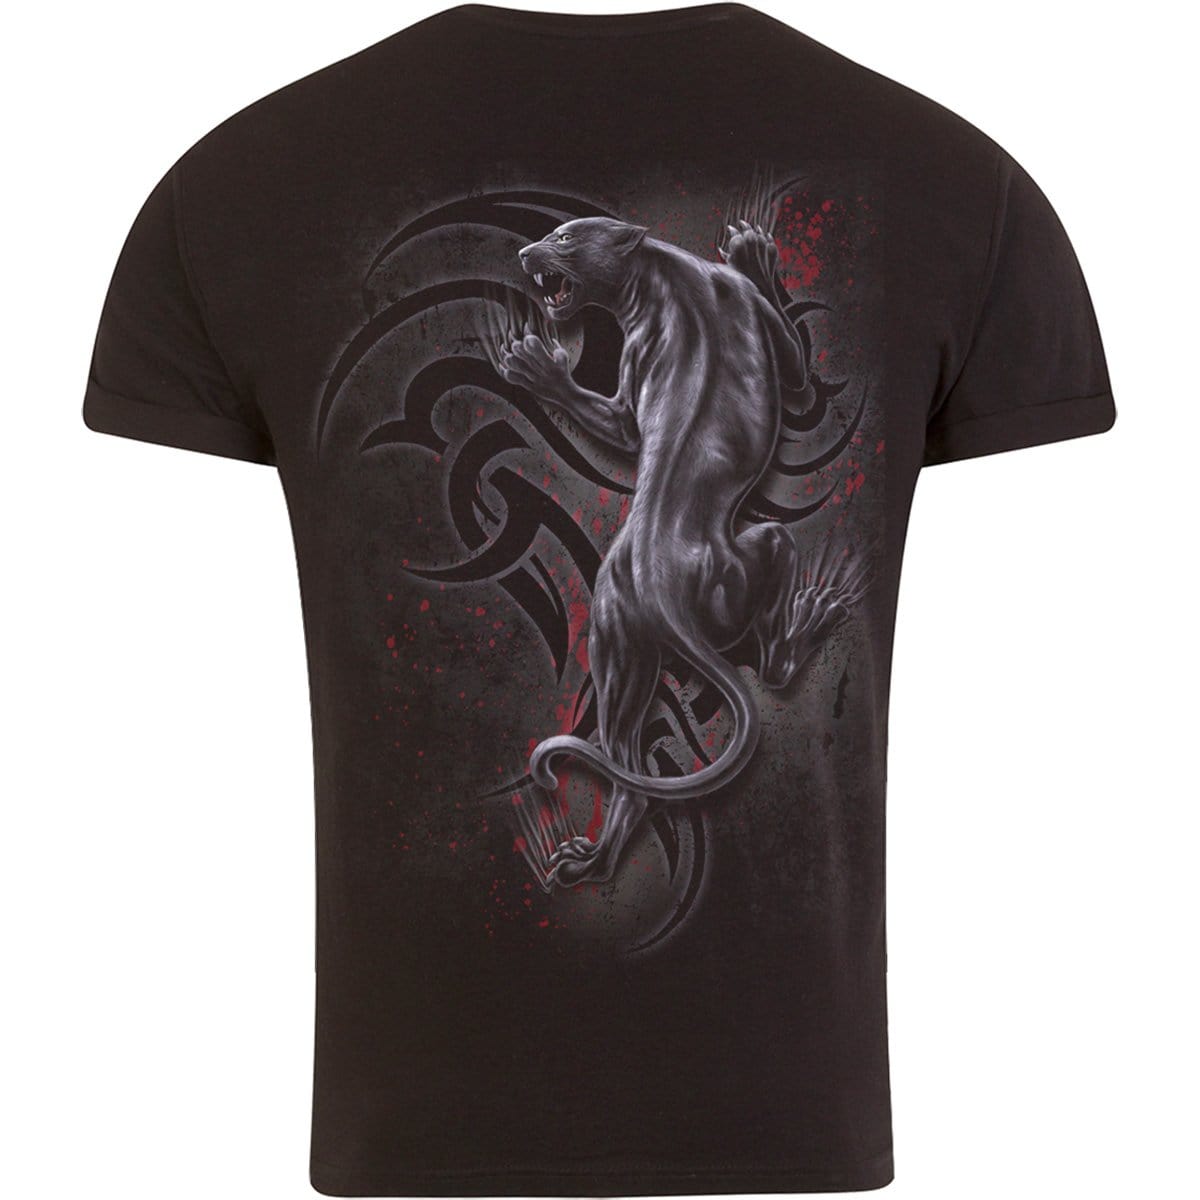 TRIBAL PANTHER - T-Shirt Modern Cut Turnup Sleeve Black - Spiral USA